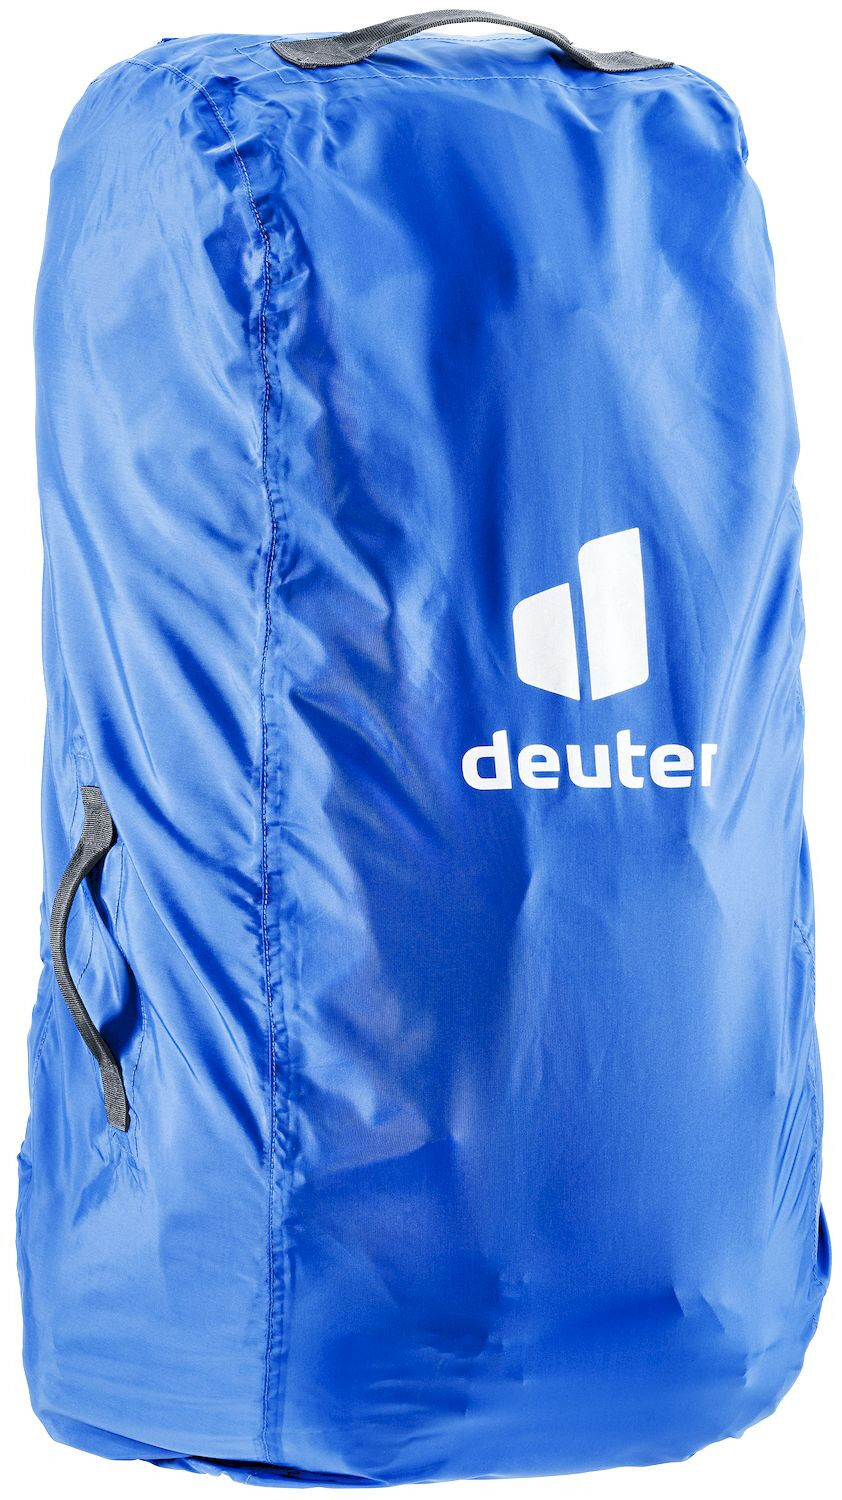 Deuter Transport Cover - Rain cover